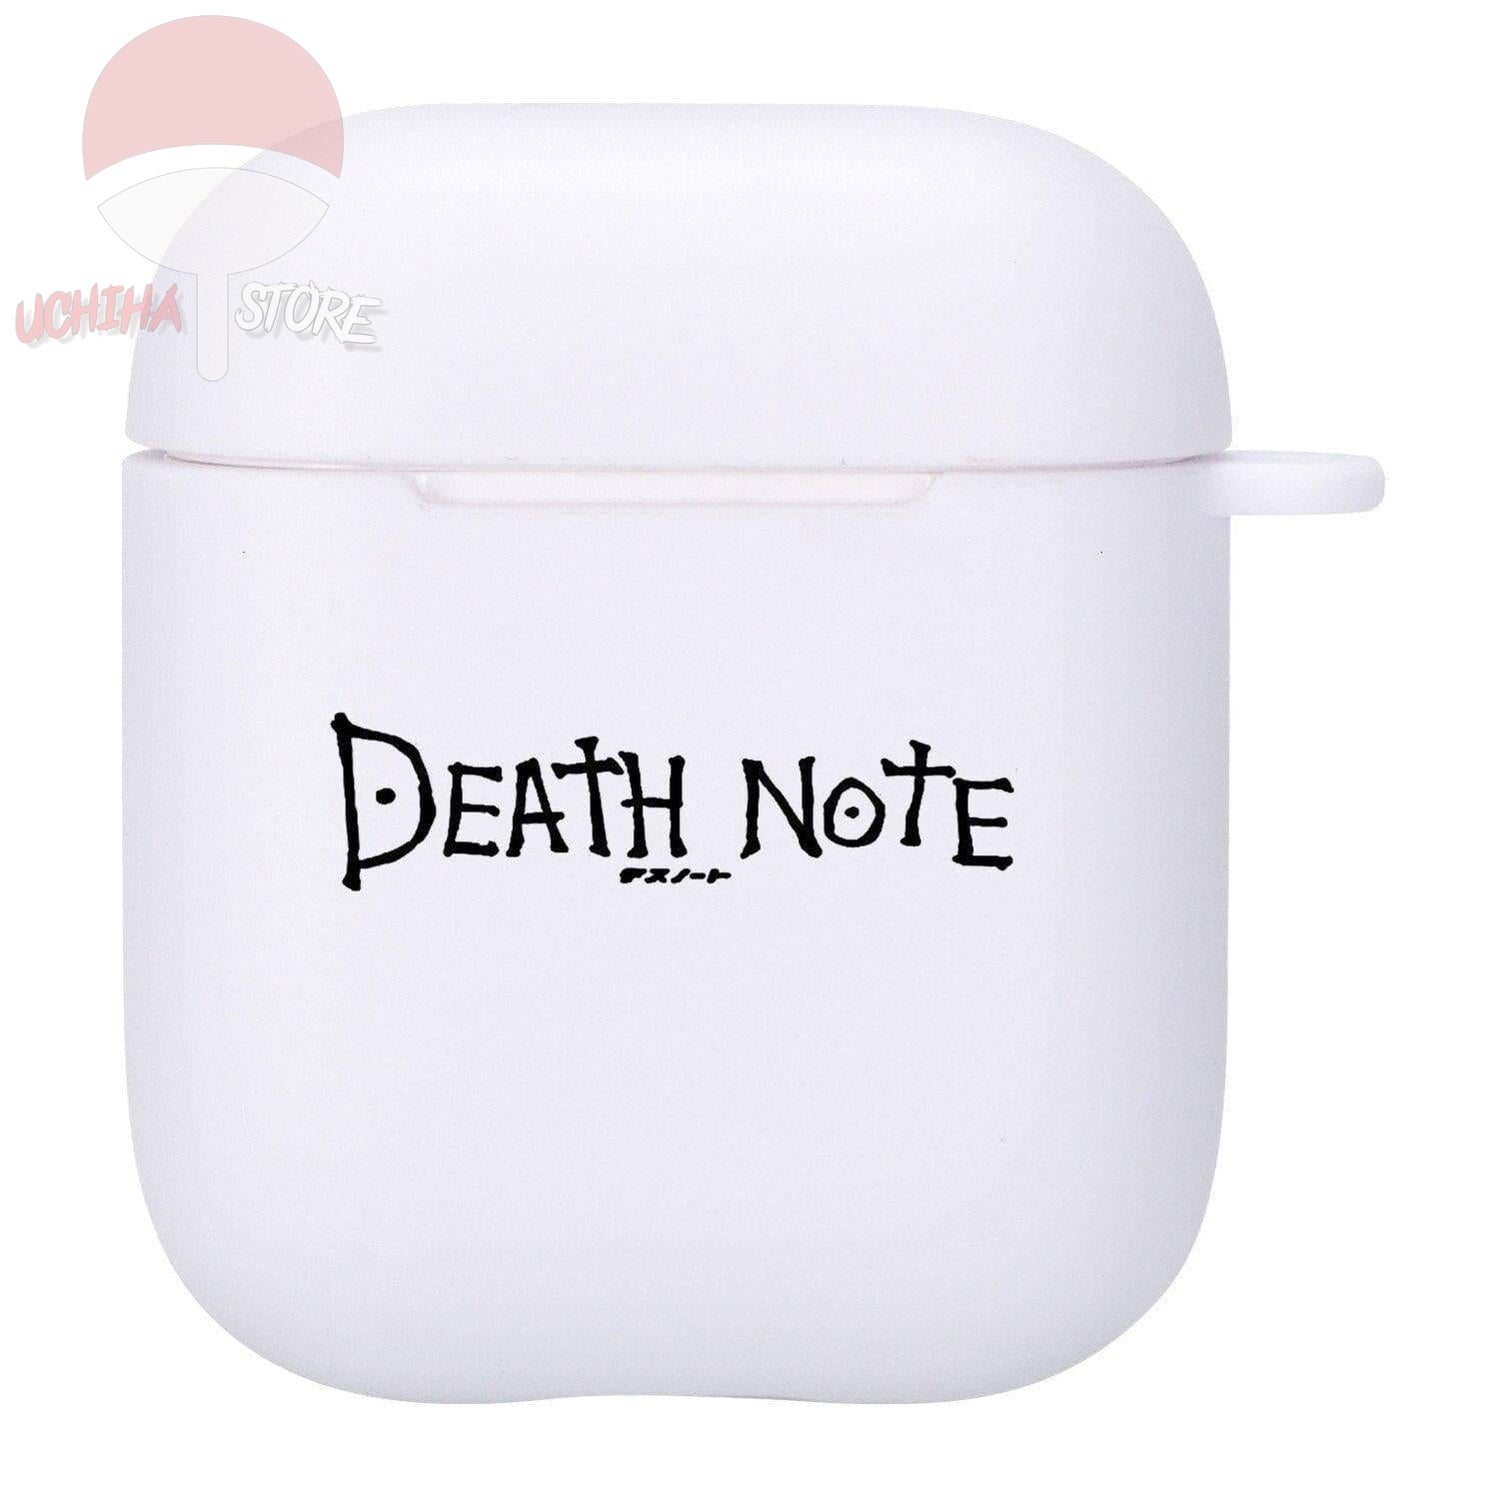 Death Note Airpods Case - Uchiha Store